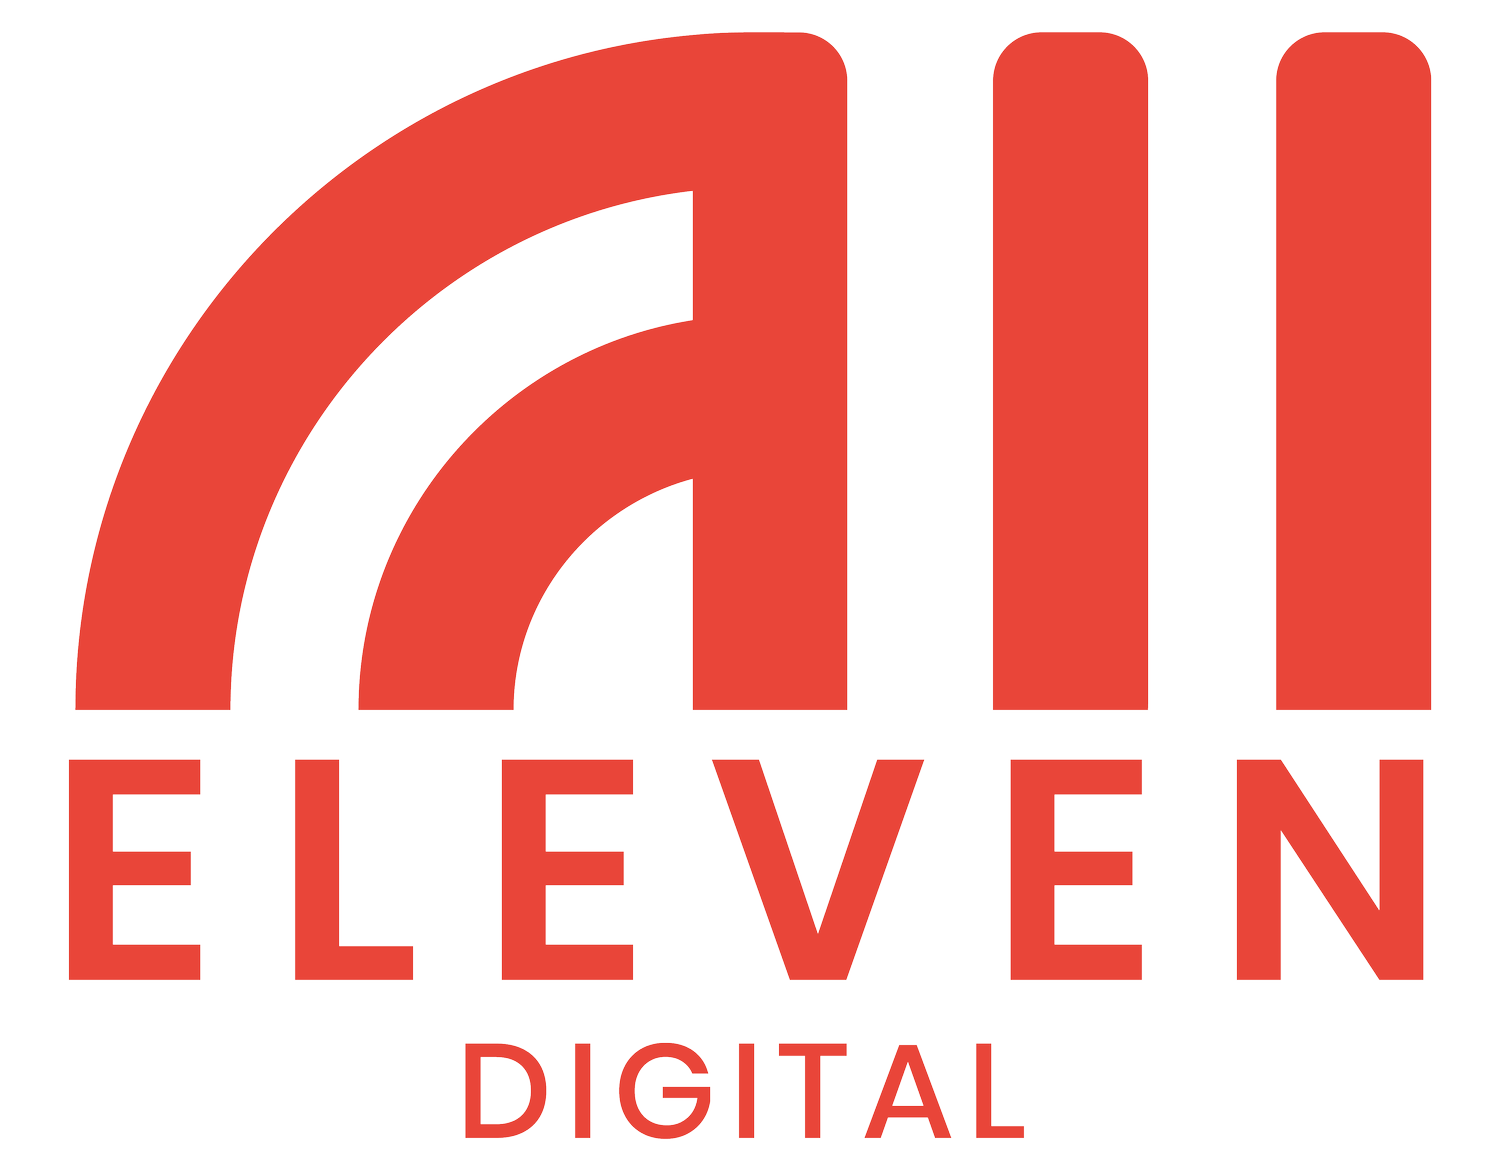 Eleven Digital